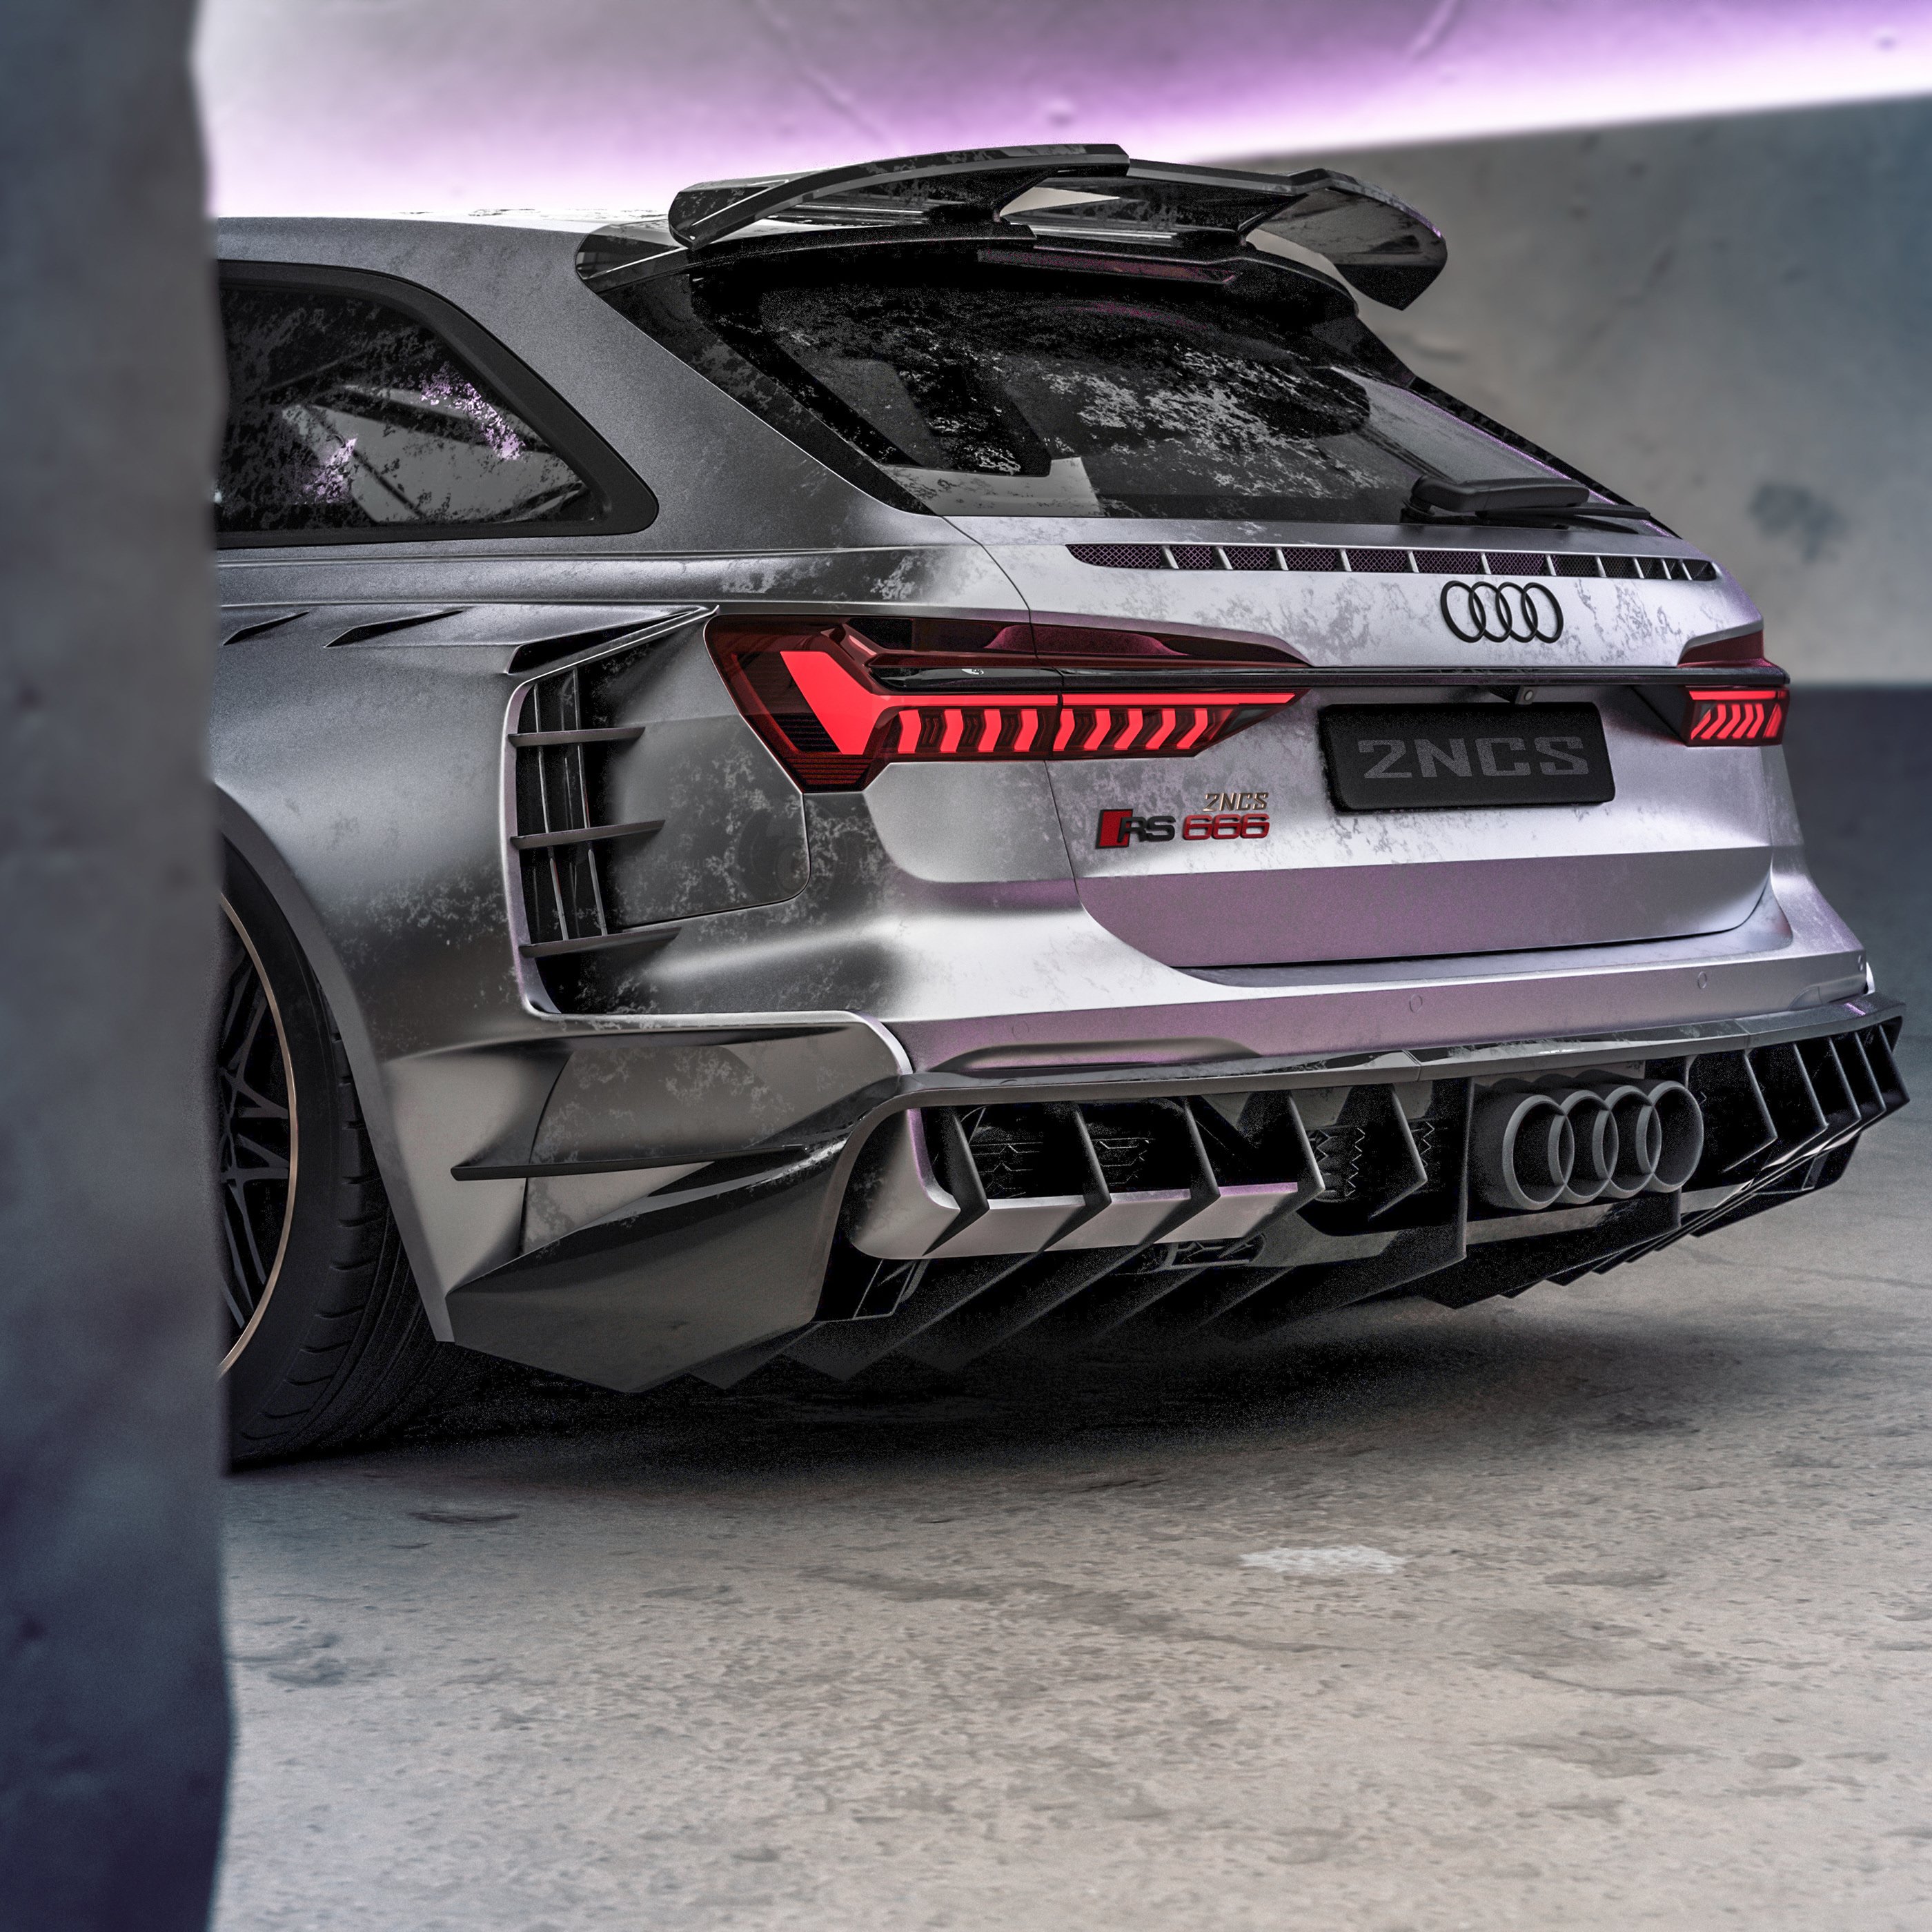 Audi RS6 Custom Body Kit by 2ncs